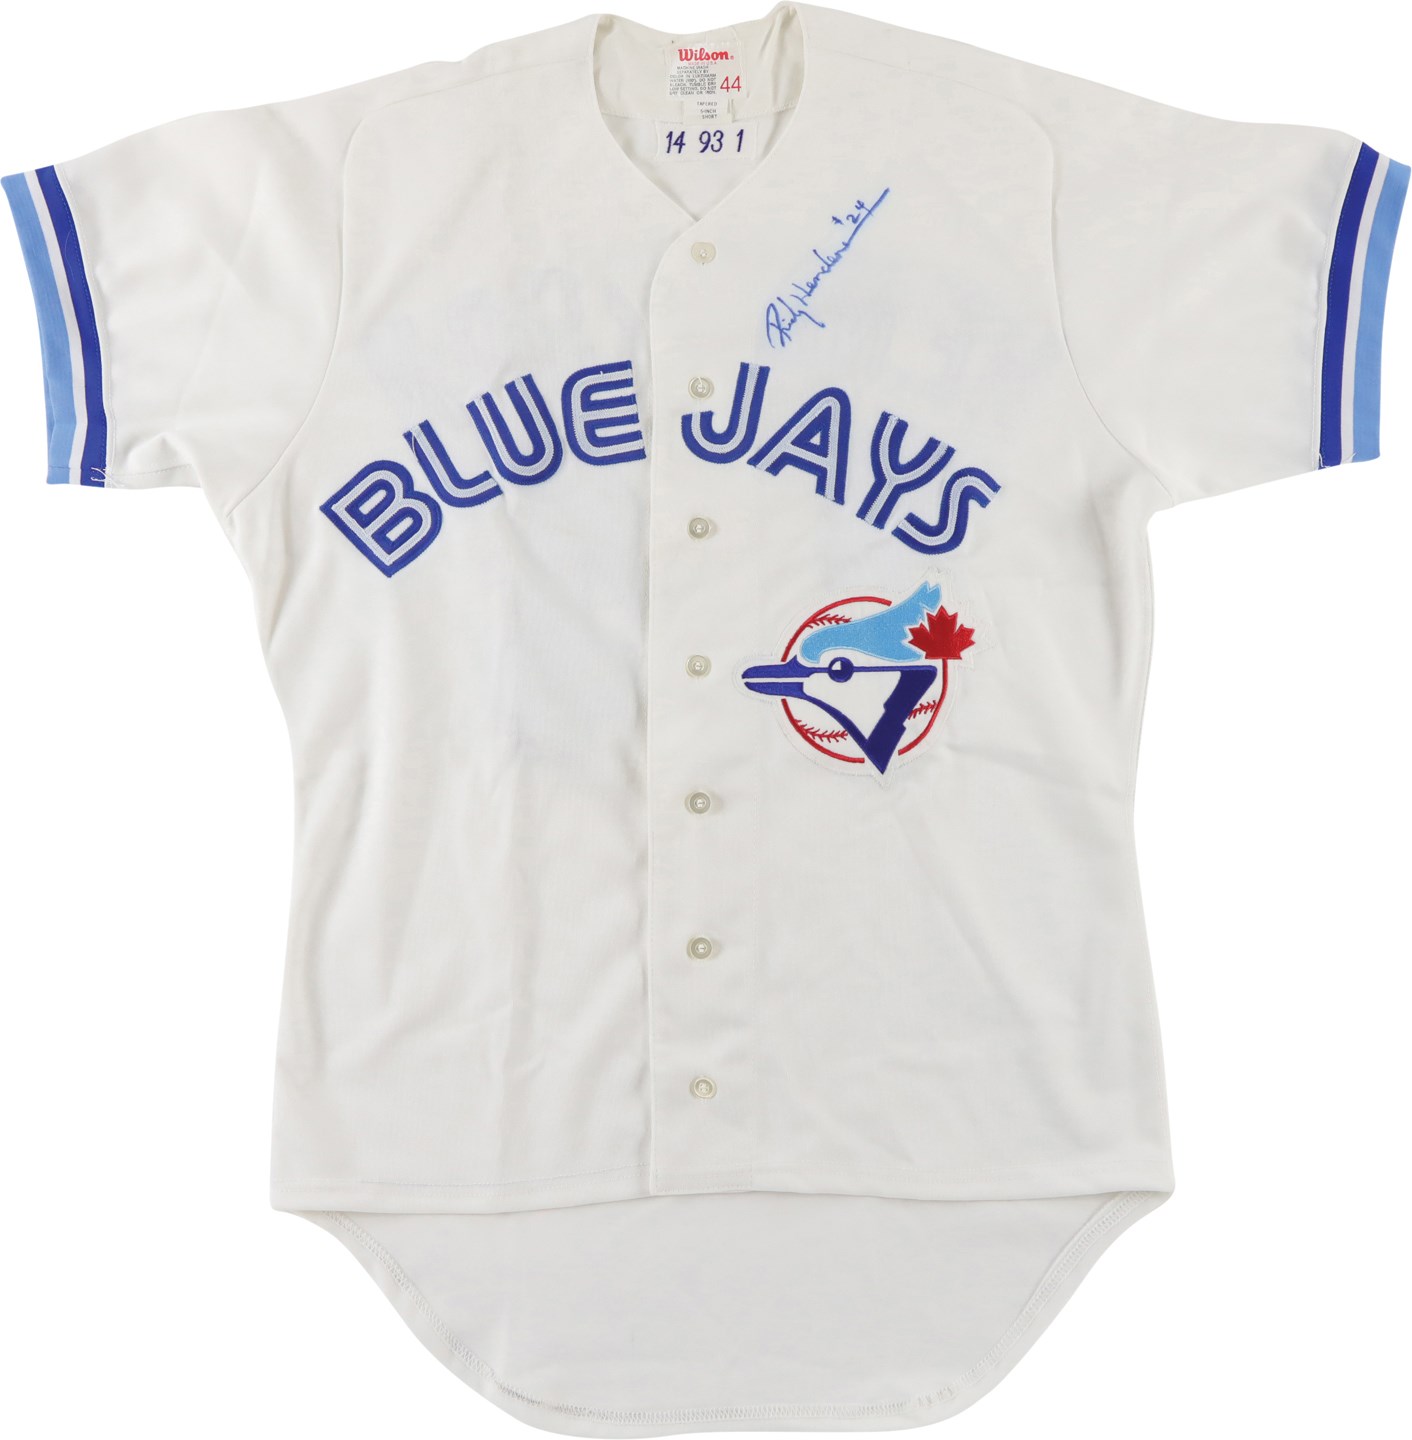 Baseball Equipment - 1993 Rickey Henderson Toronto Blue Jays Signed Game Issued Jersey